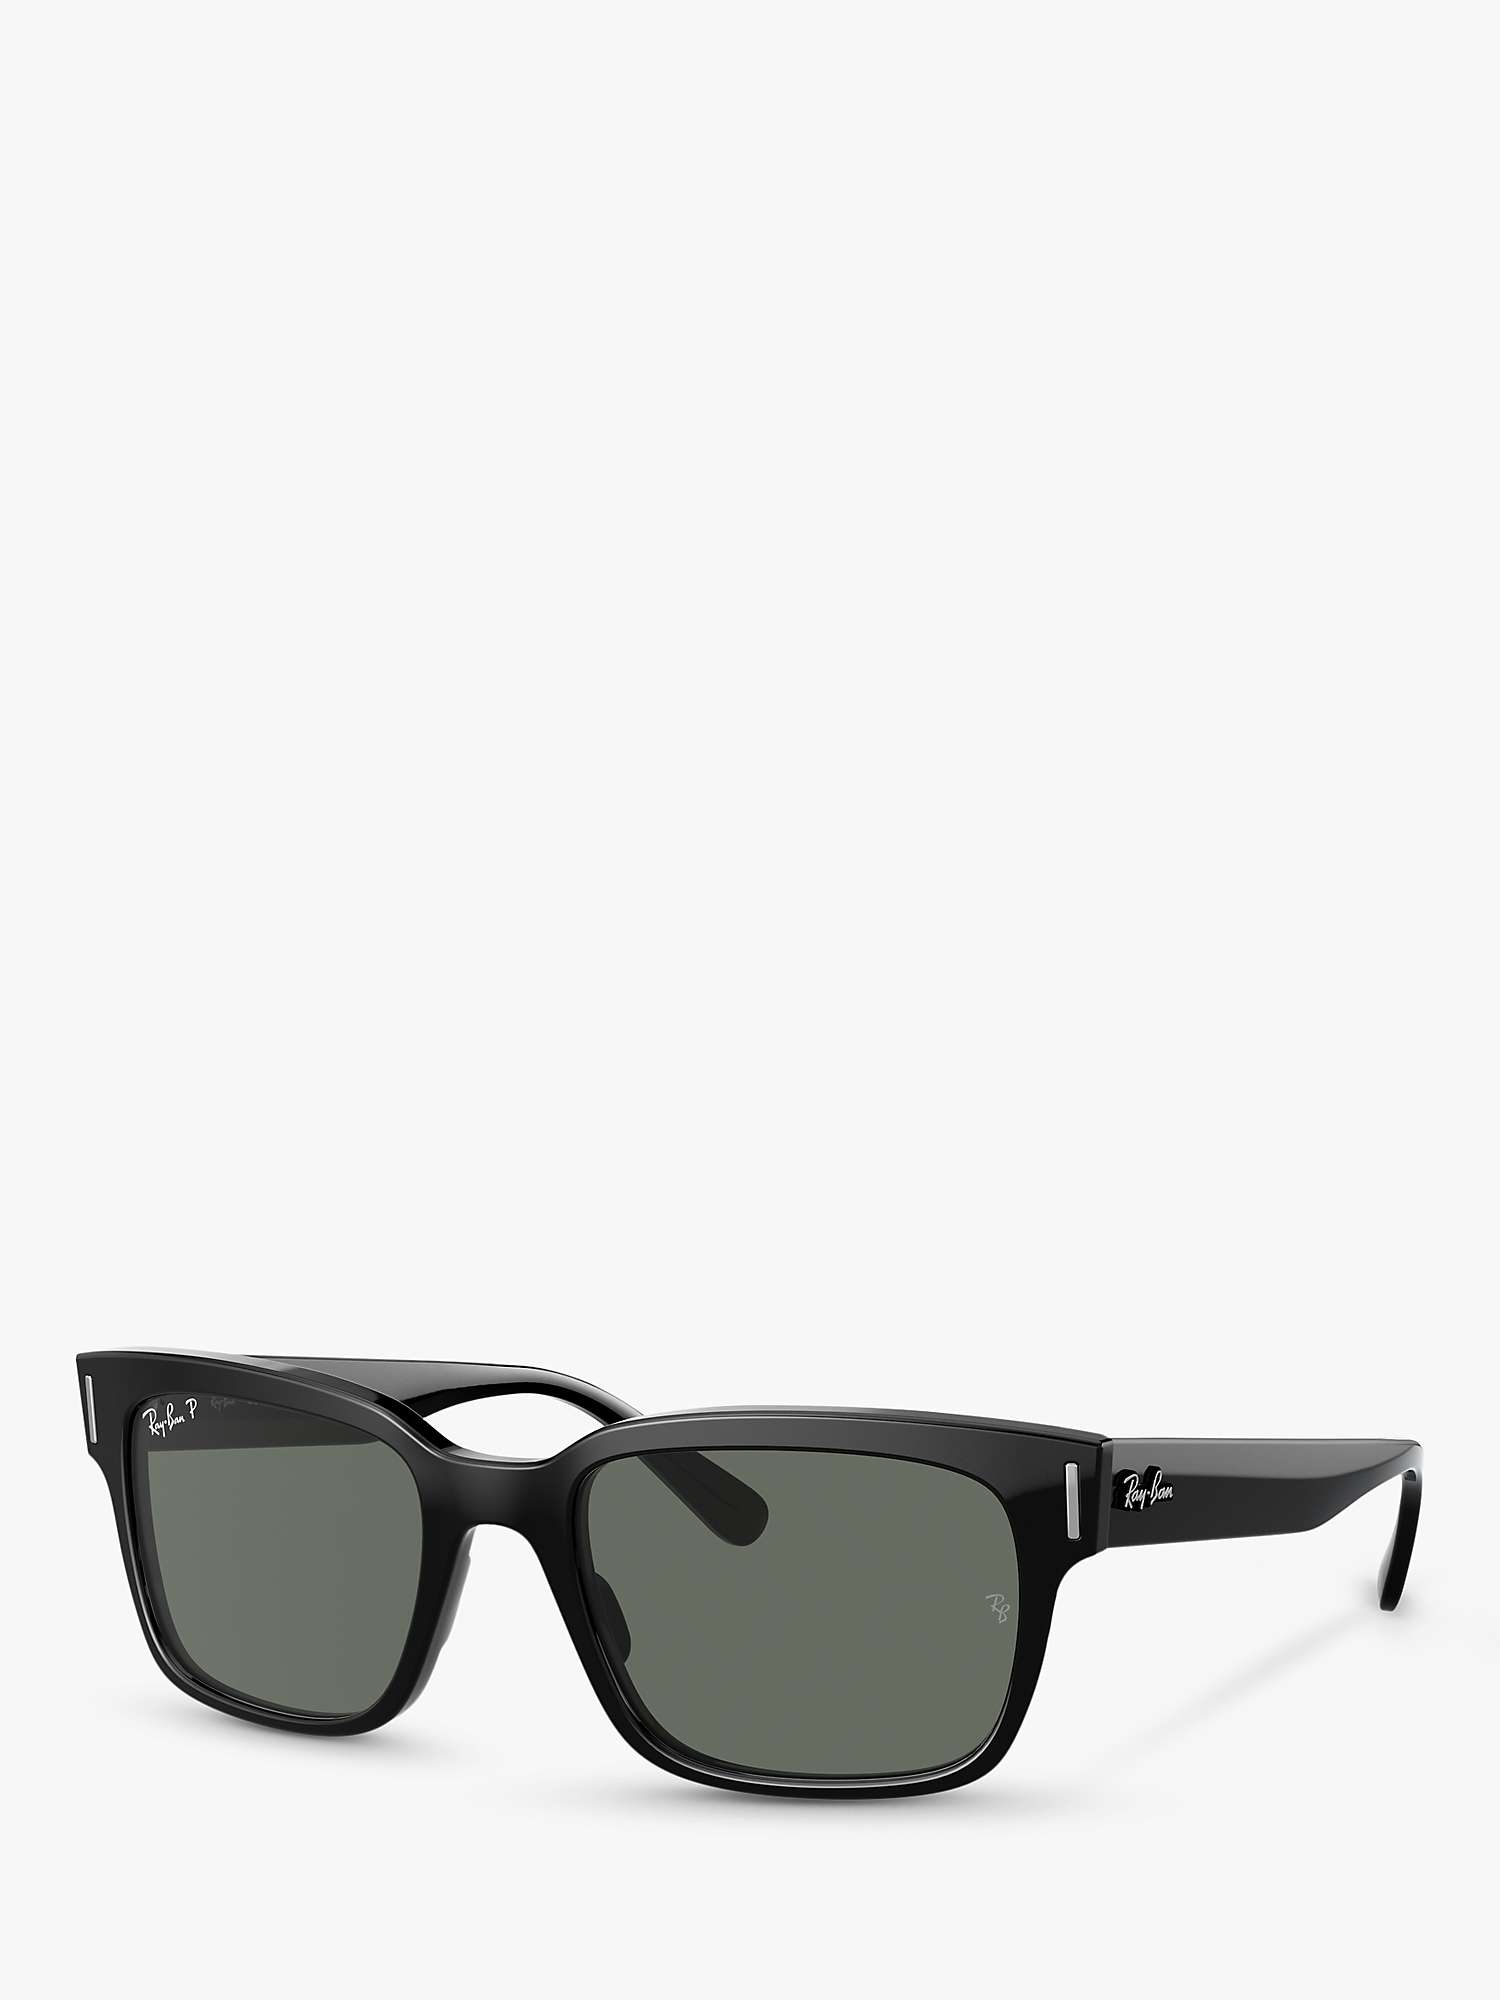 Buy Ray-Ban RB2190 Men's Polarised Square Sunglasses, Black/Grey Online at johnlewis.com